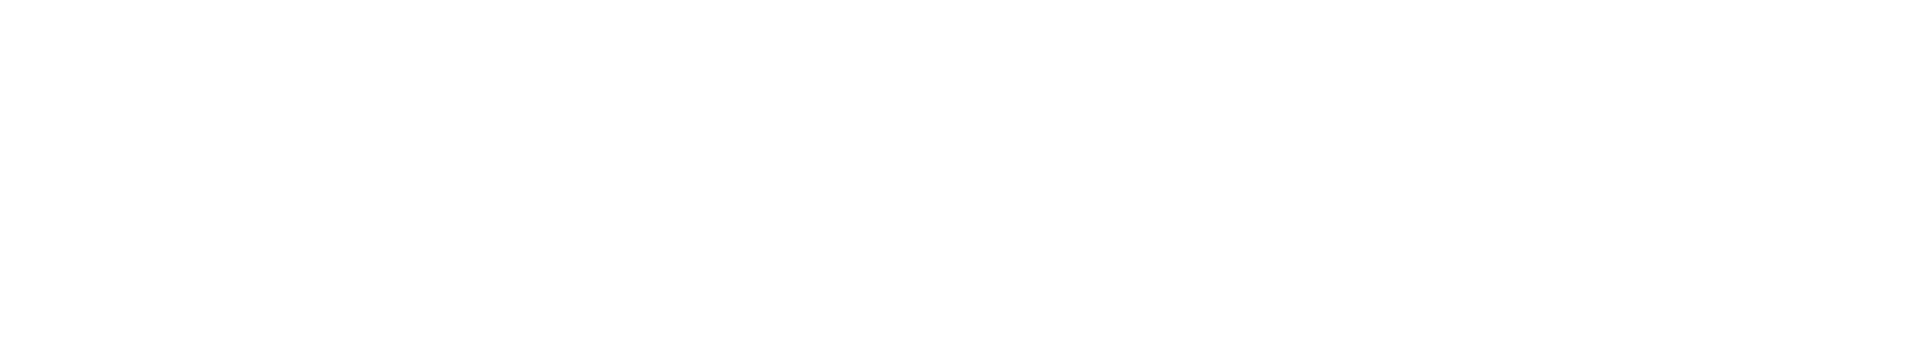 Размер рулона, «-Брик», форма «Слим», 200 мл с трубочкой, таблица